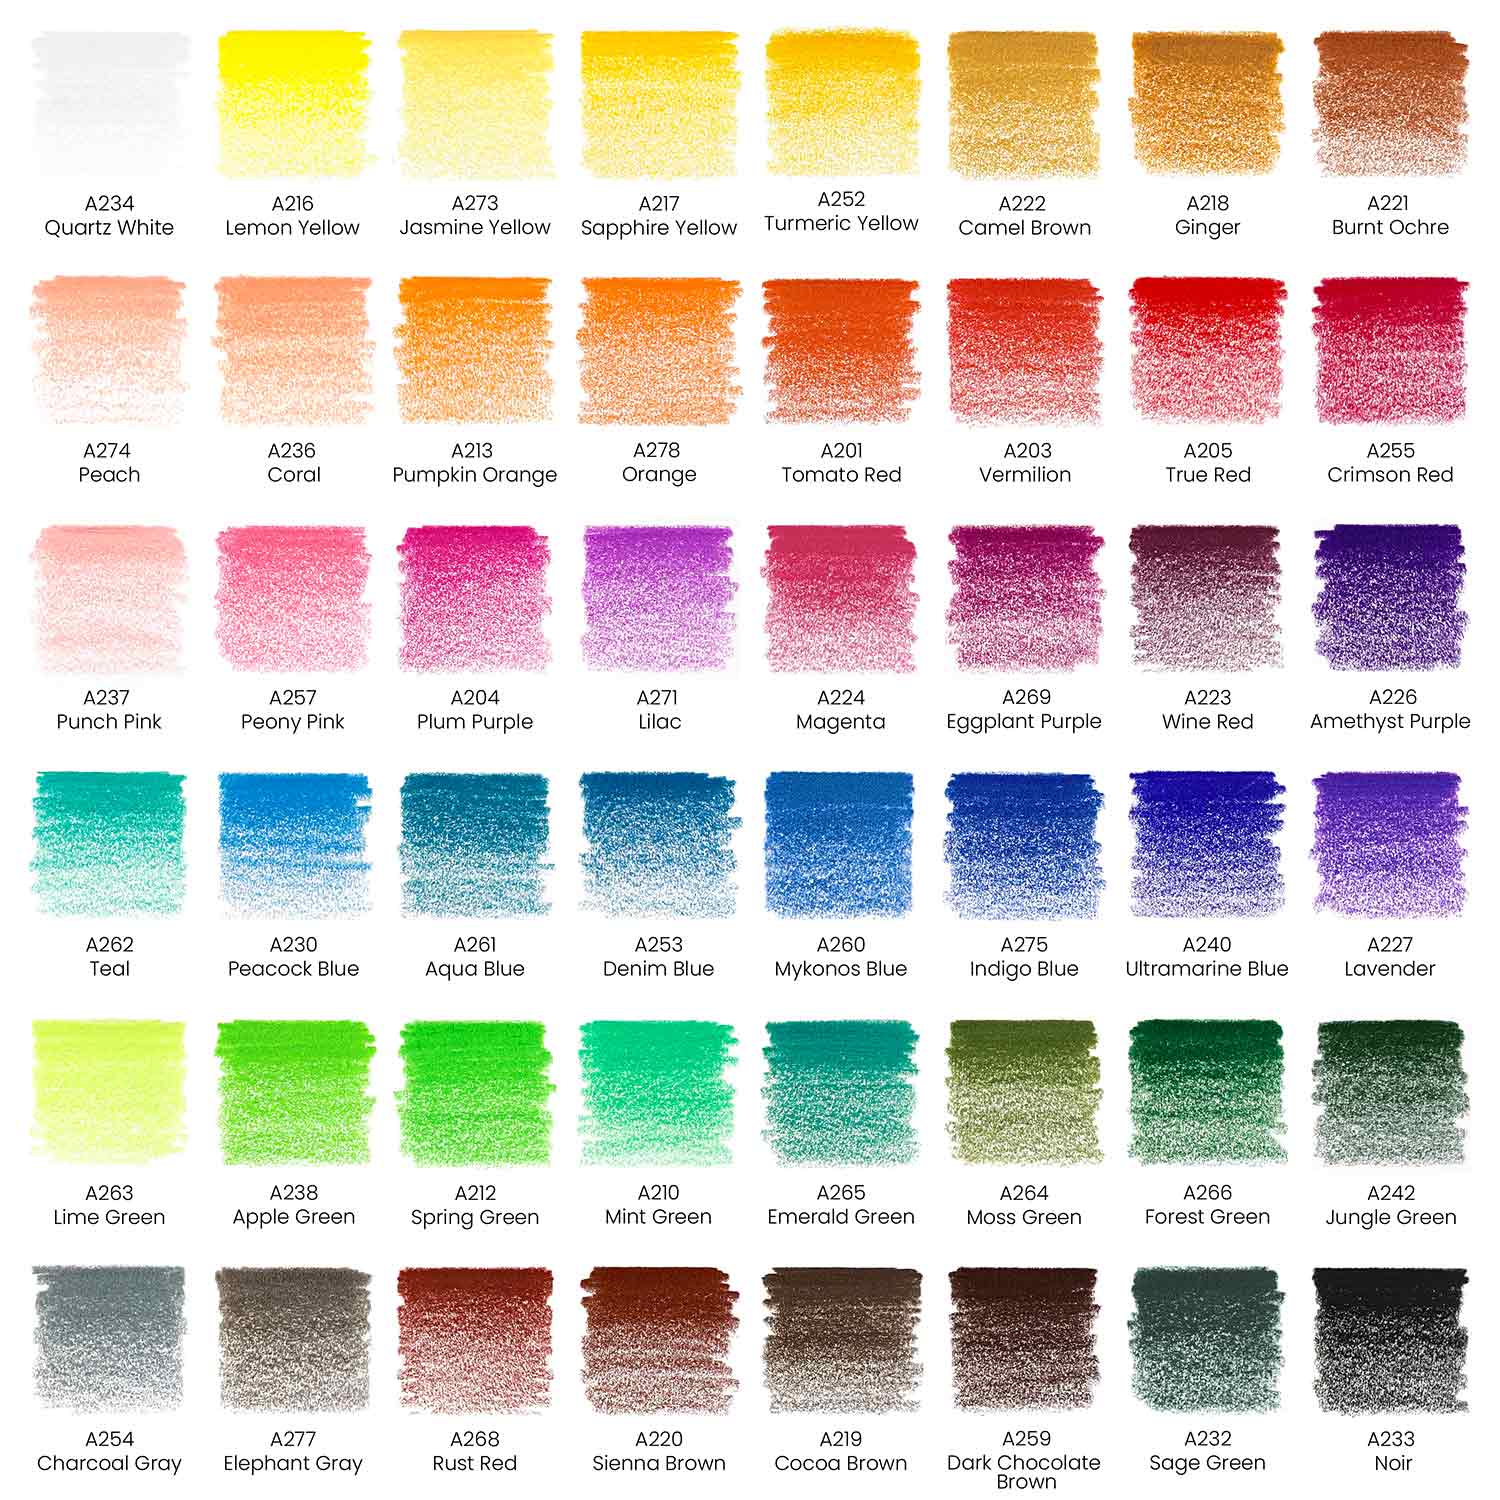 Set 48 Lápices Profesionales Colores Dibujo Arteza Premium